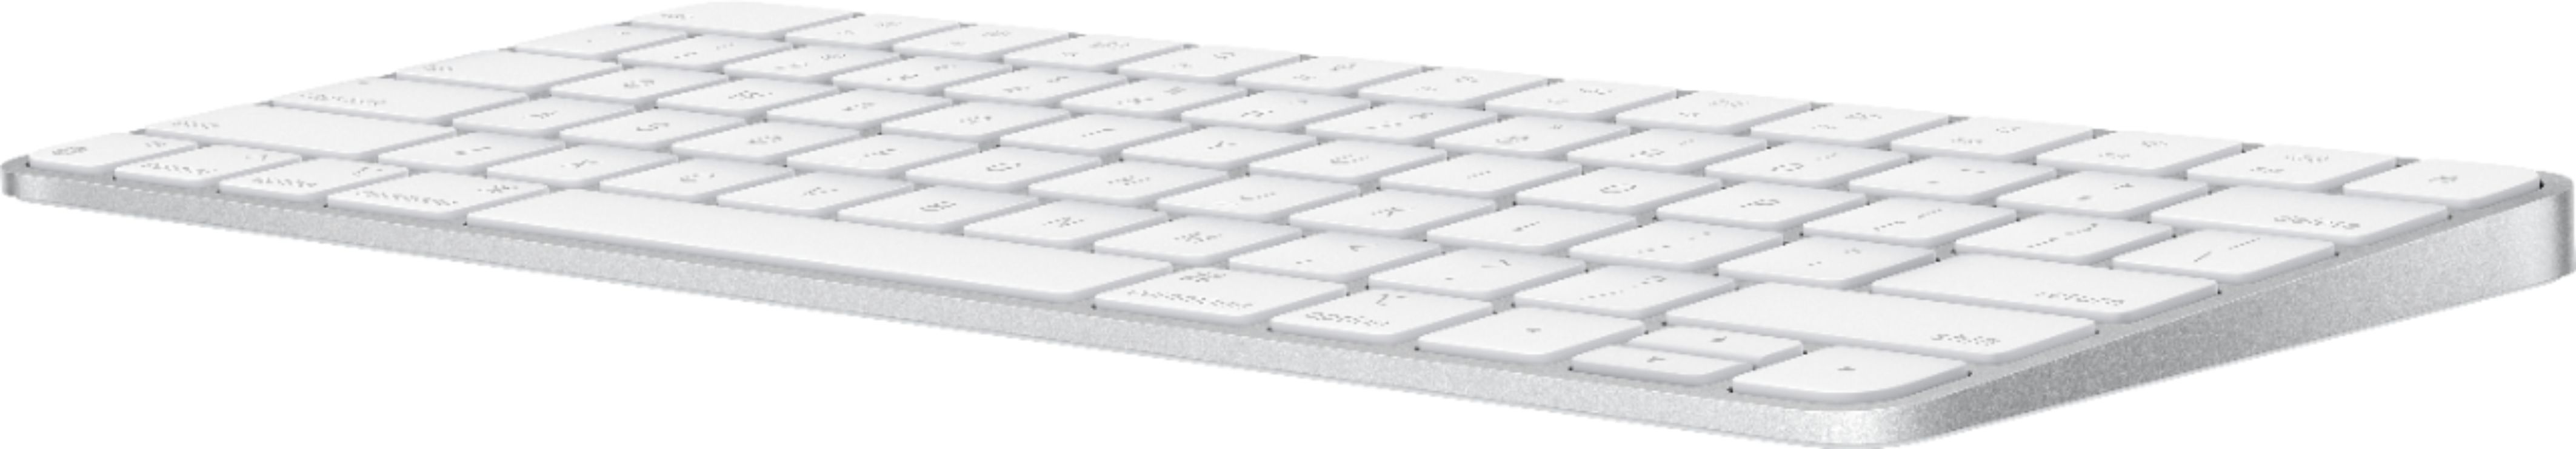 Apple Magic Keyboard MK2A3LL/A - Best Buy